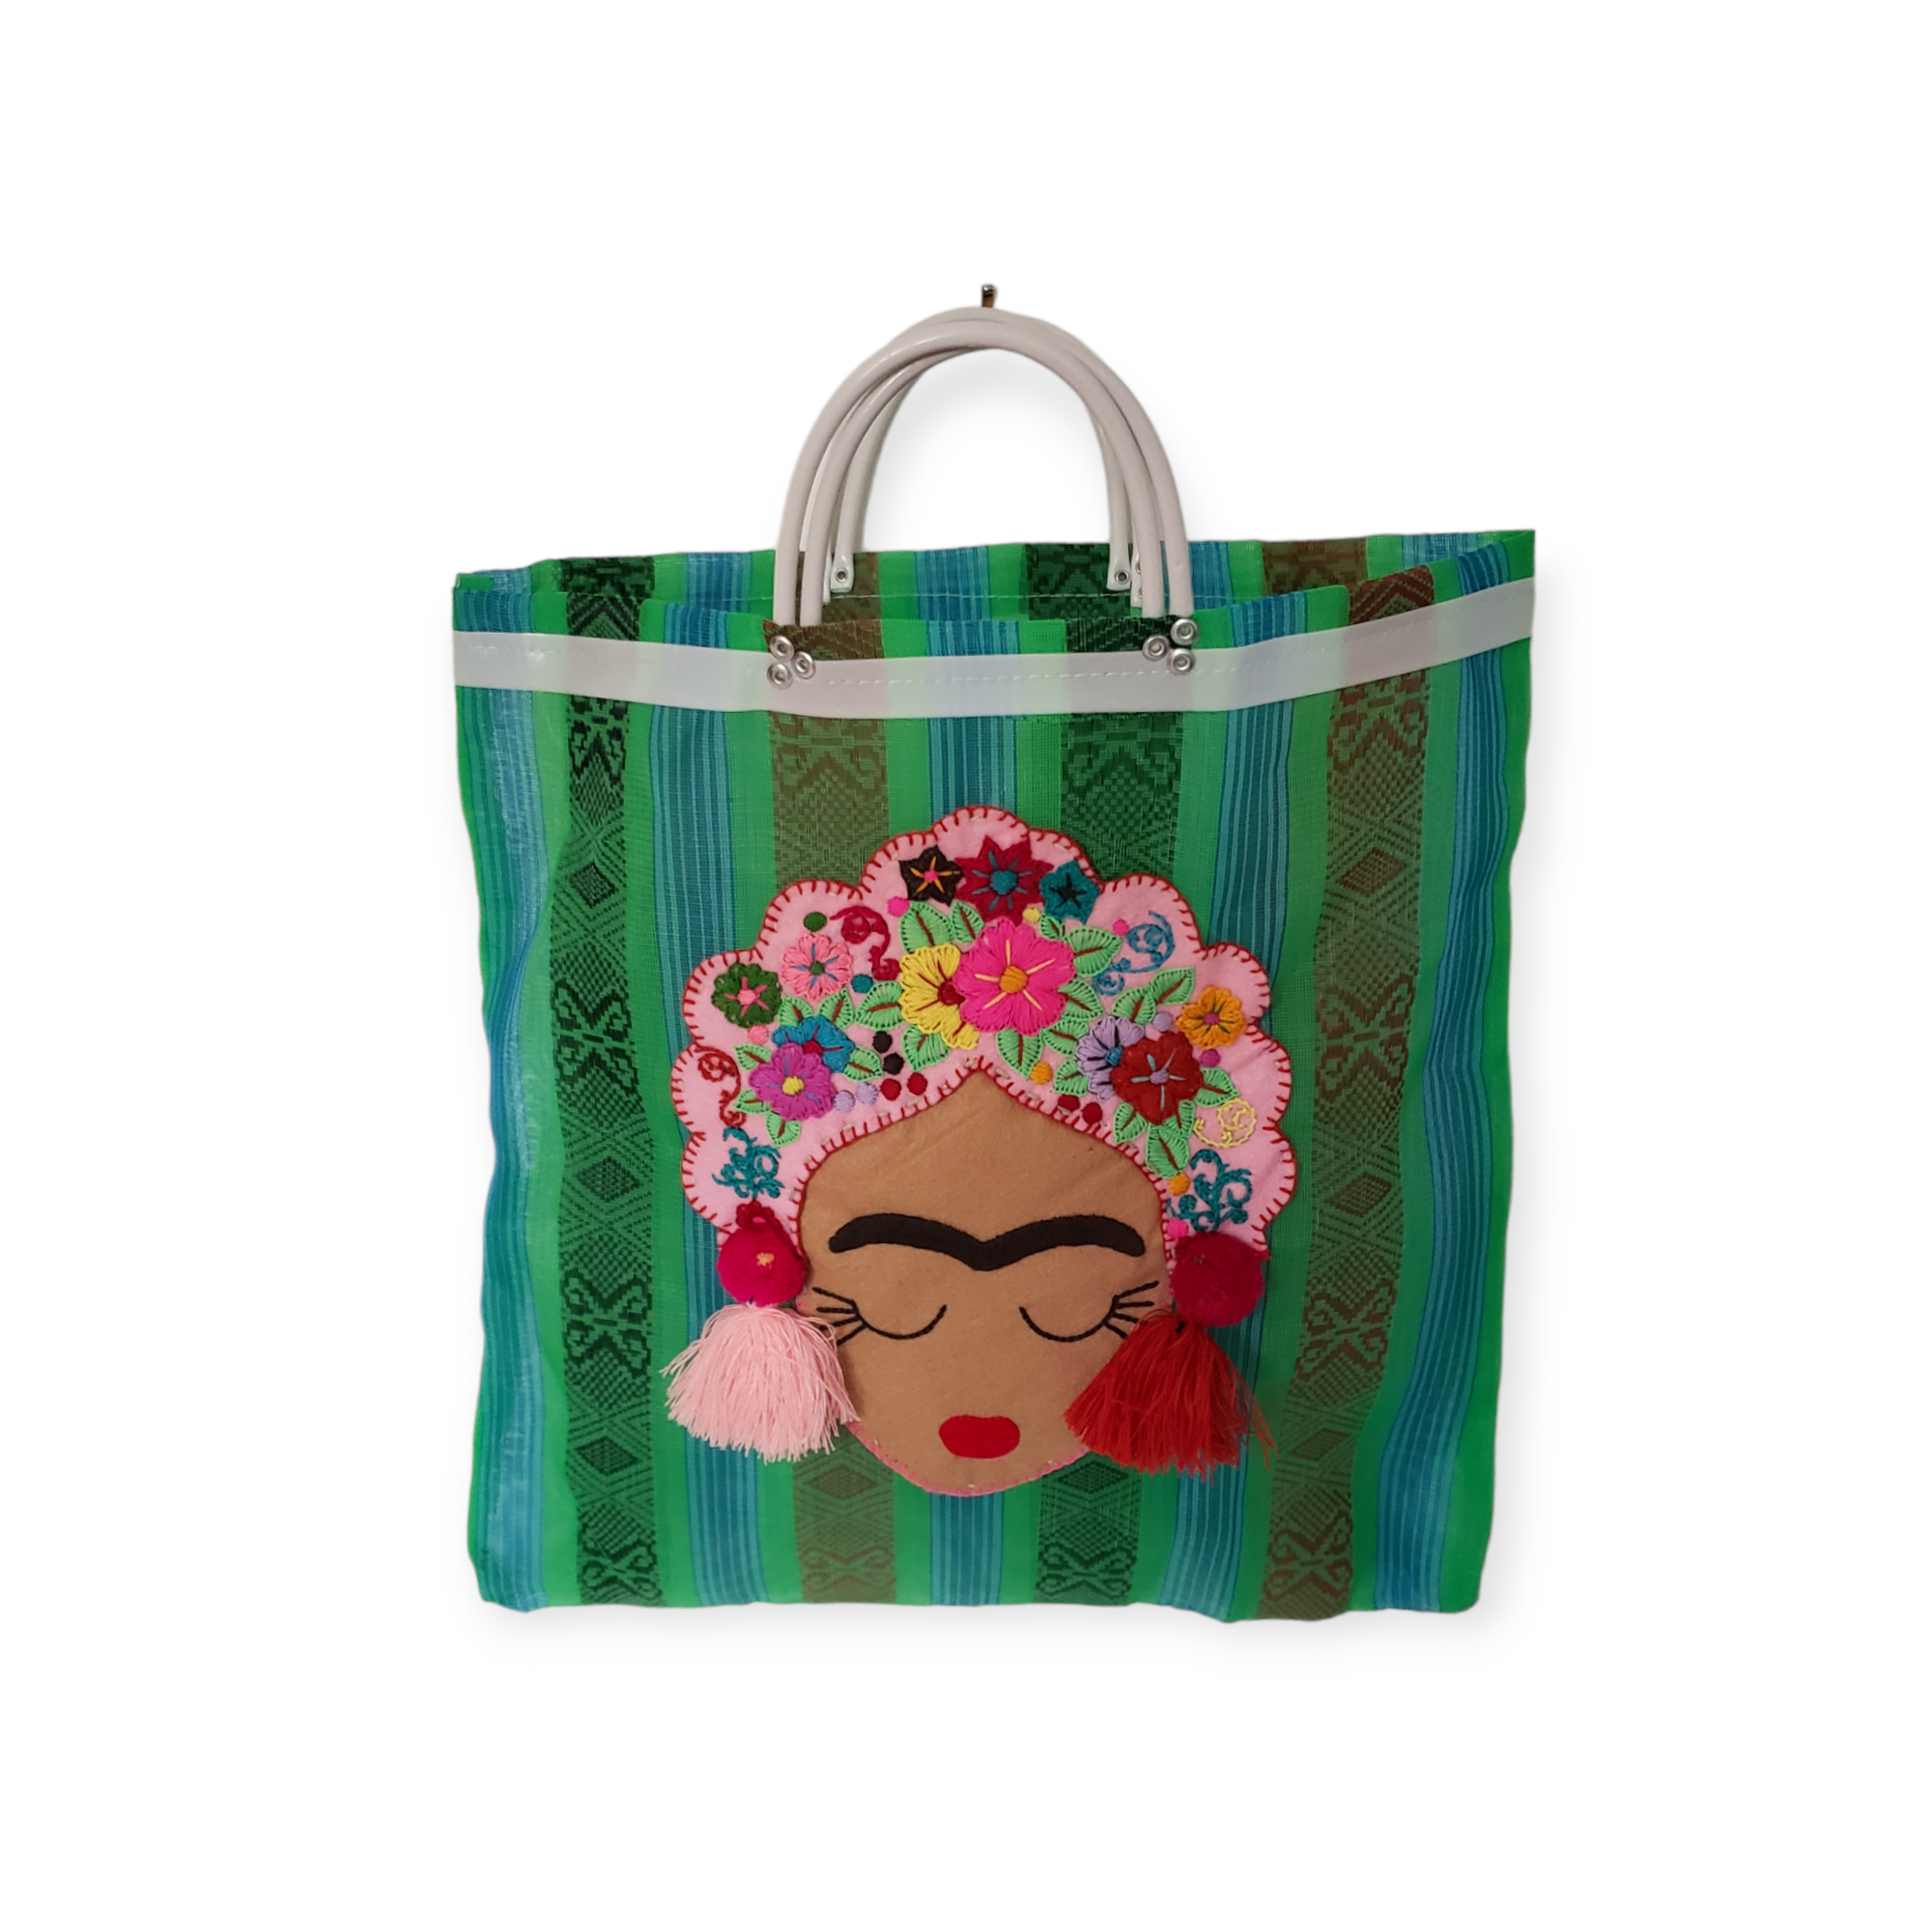 Frida Kahlo Tote Bags for Sale - Fine Art America